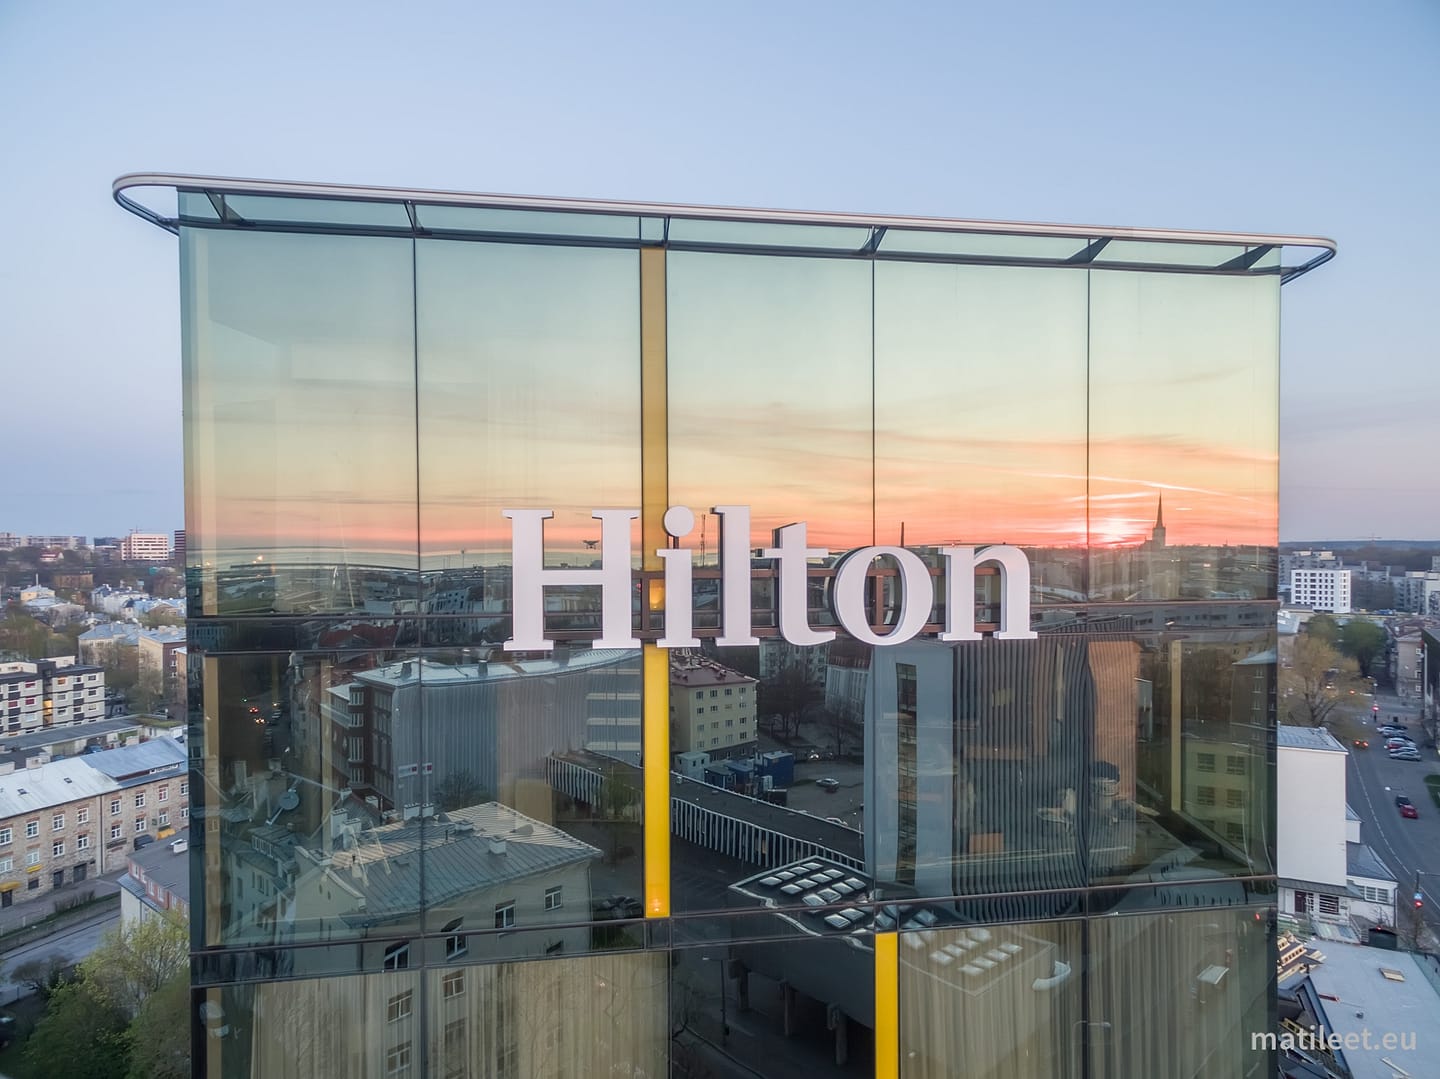 Hilton Tallinn Park Hotel DJI 0386 HDR